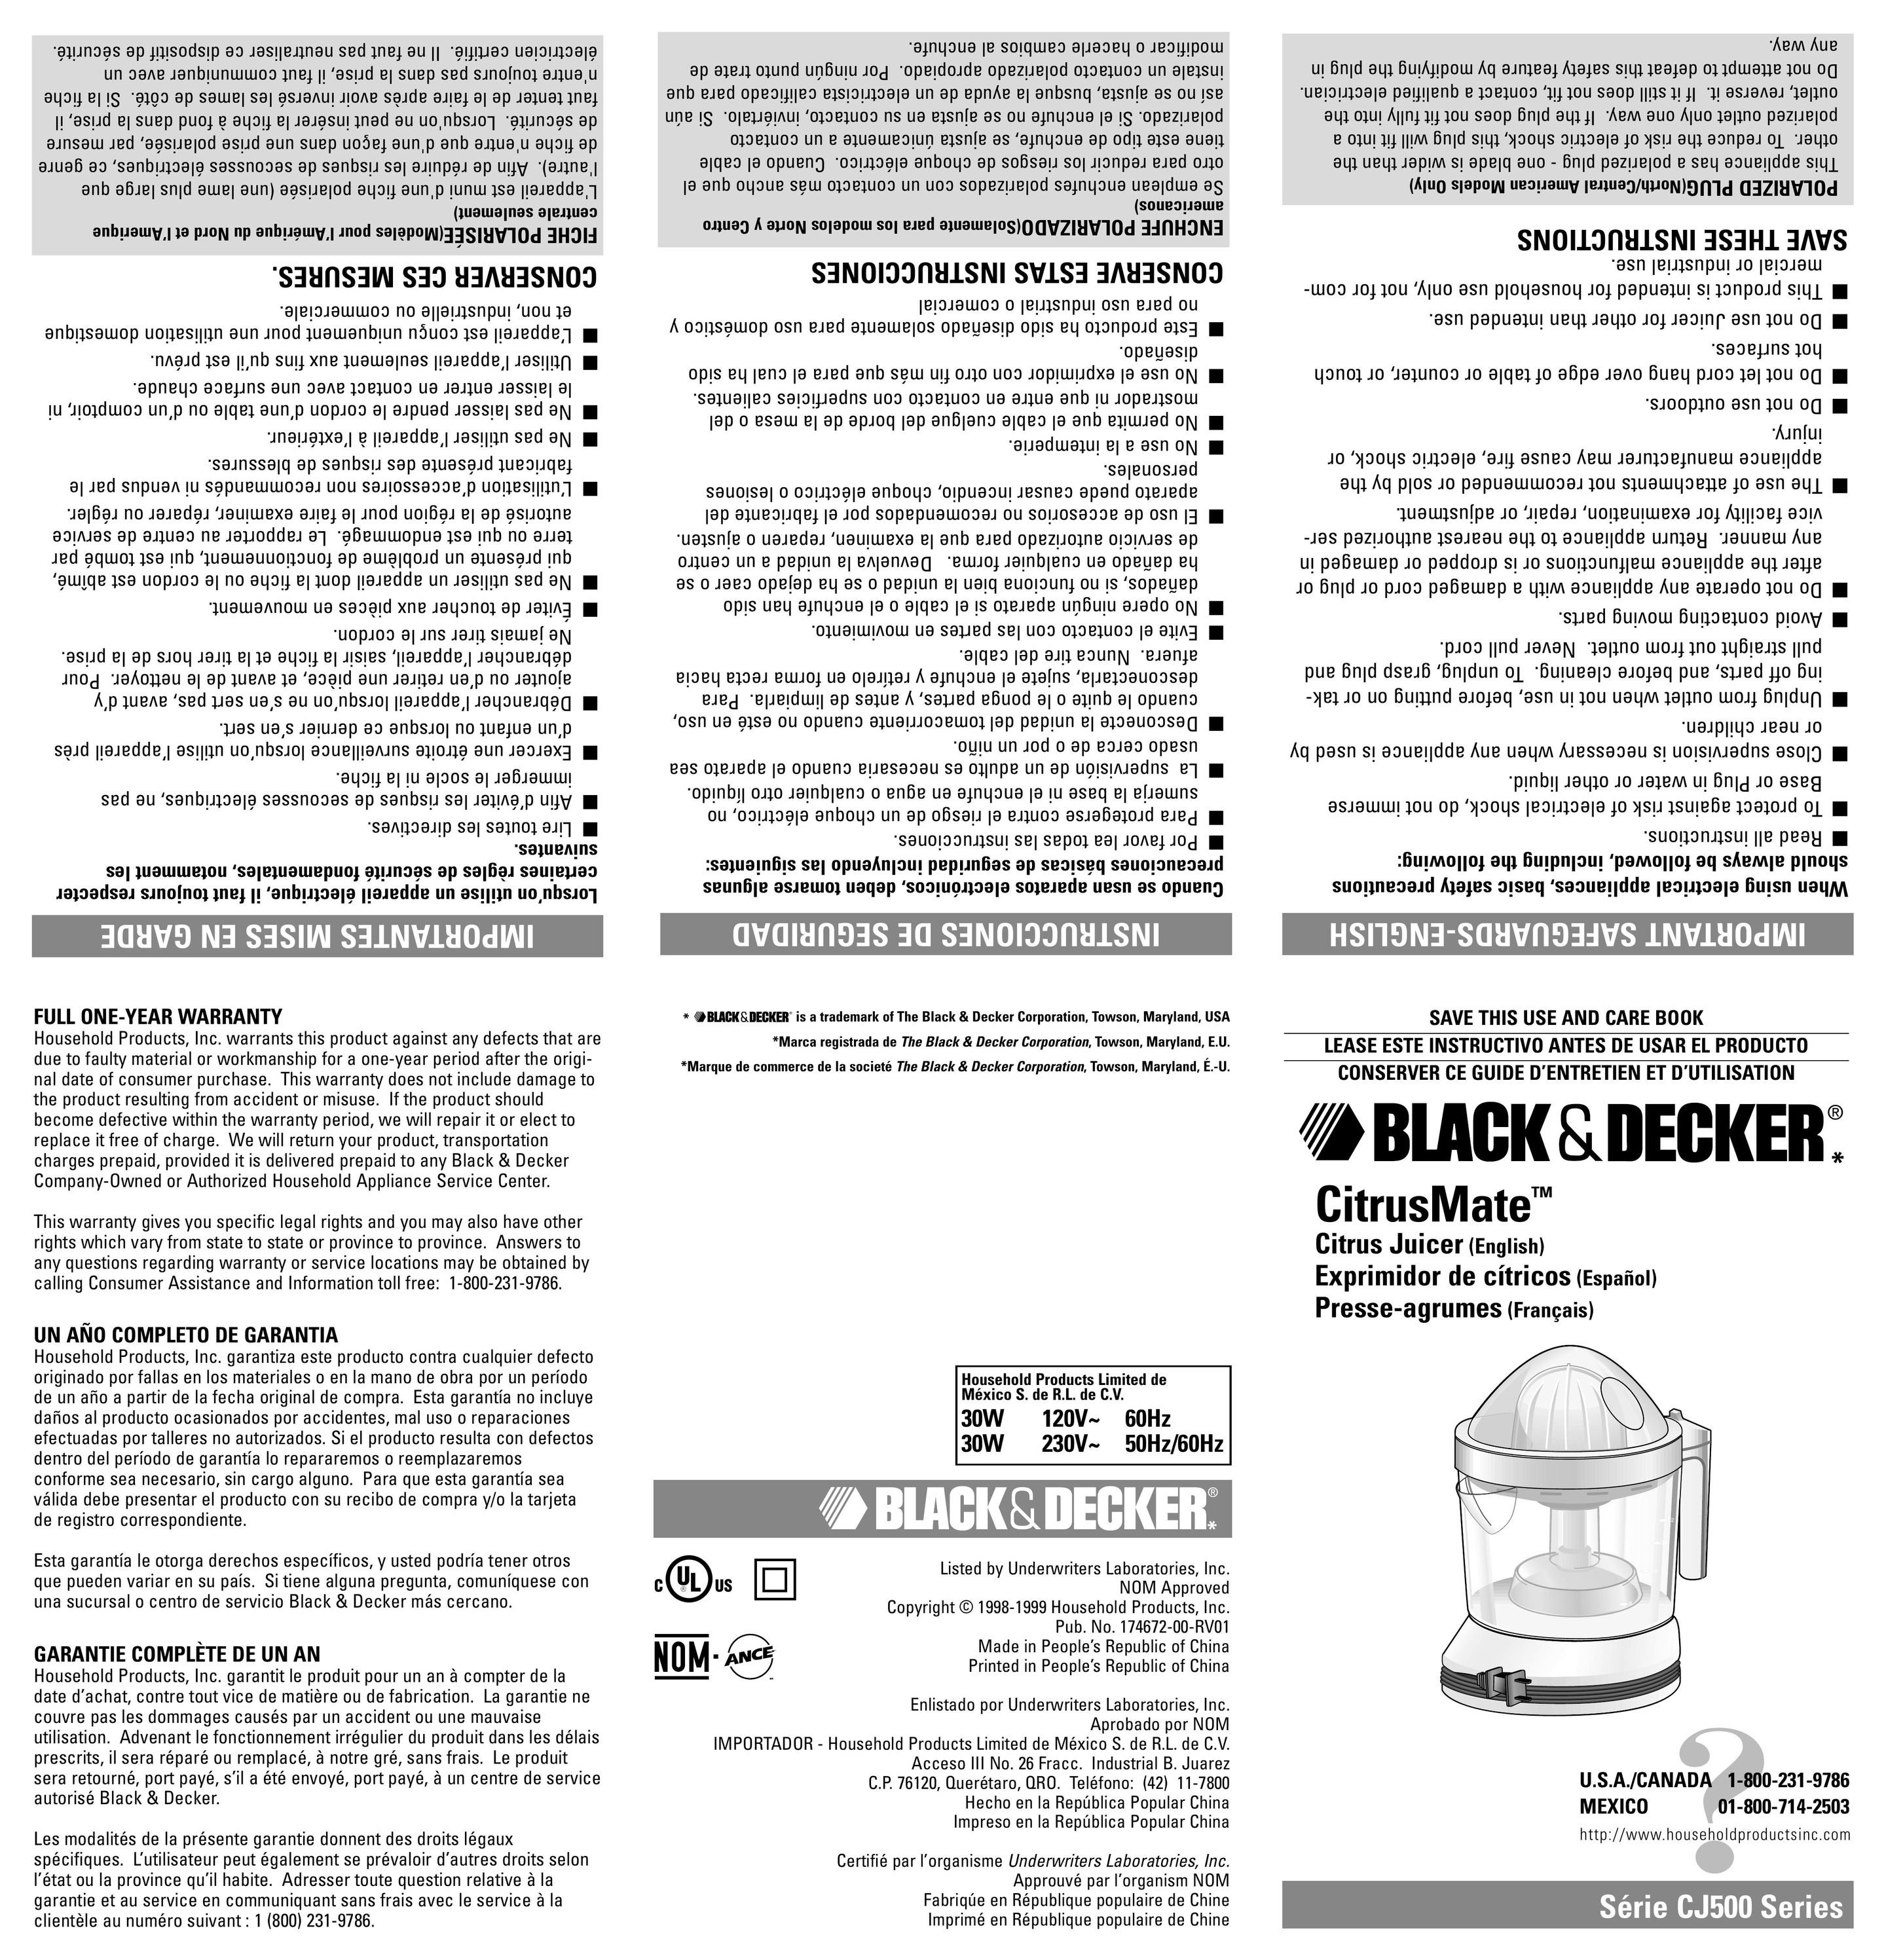 Black & Decker CJ500 Juicer User Manual